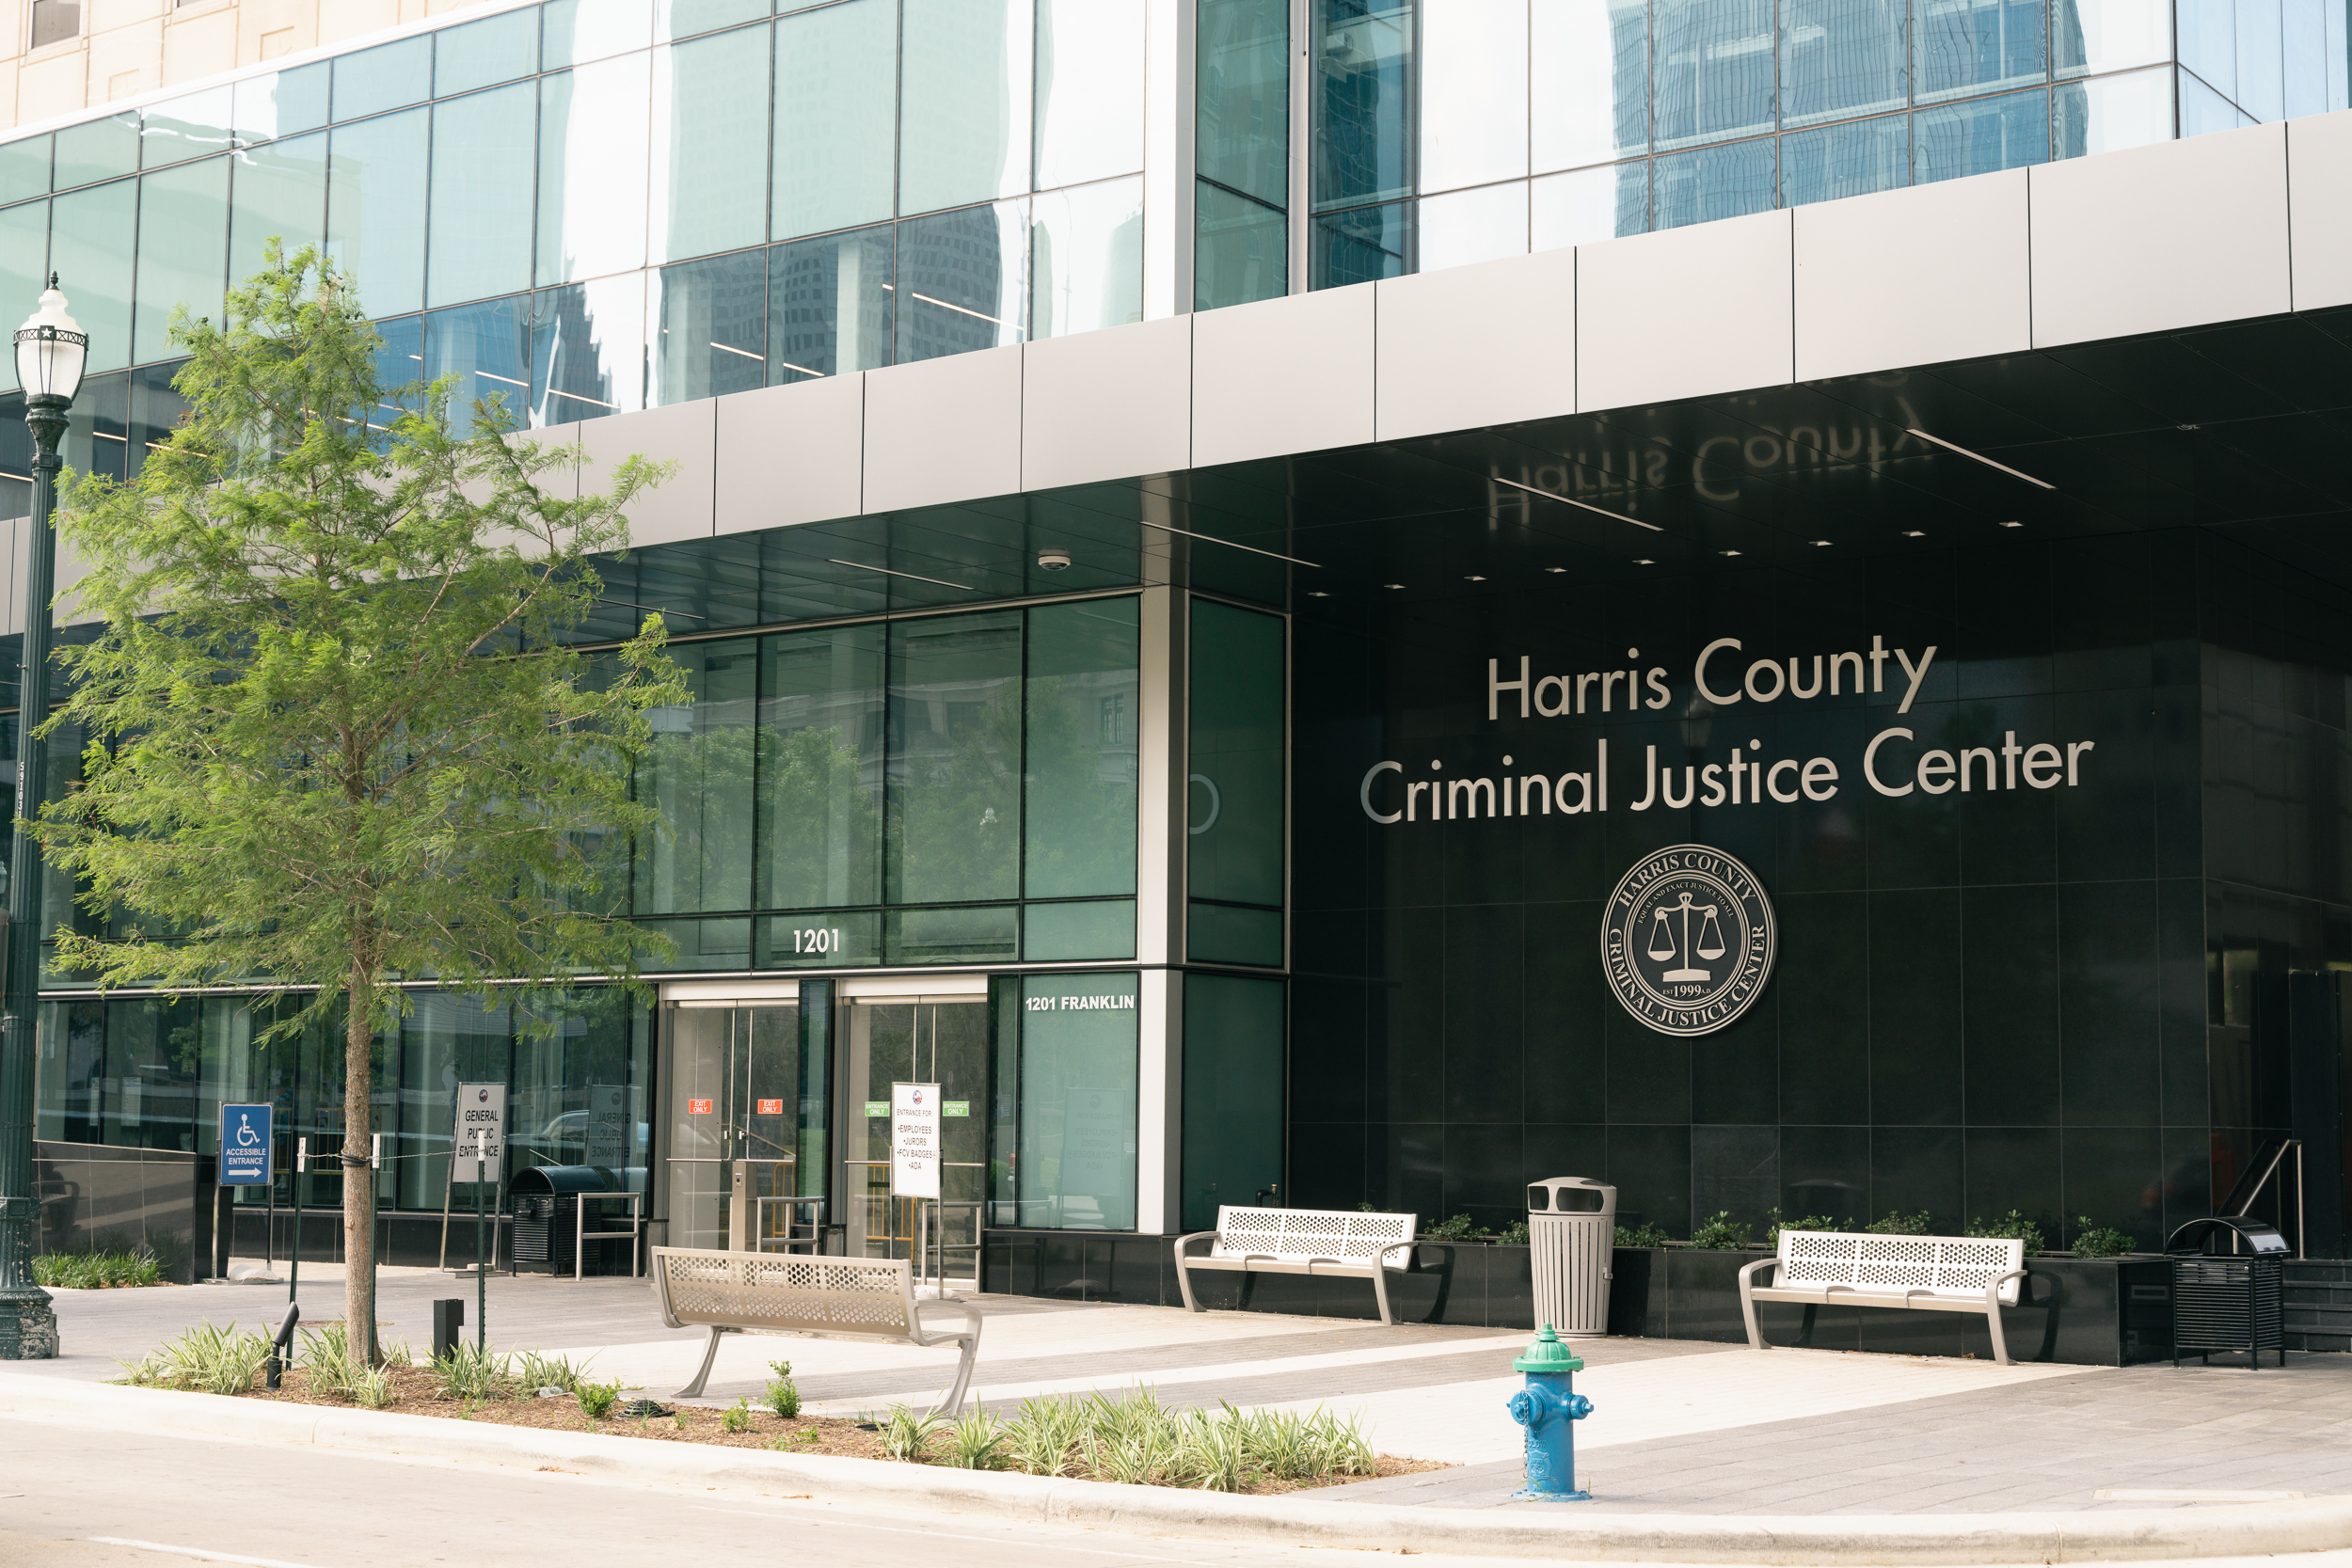 Harris County Criminal Justice Center